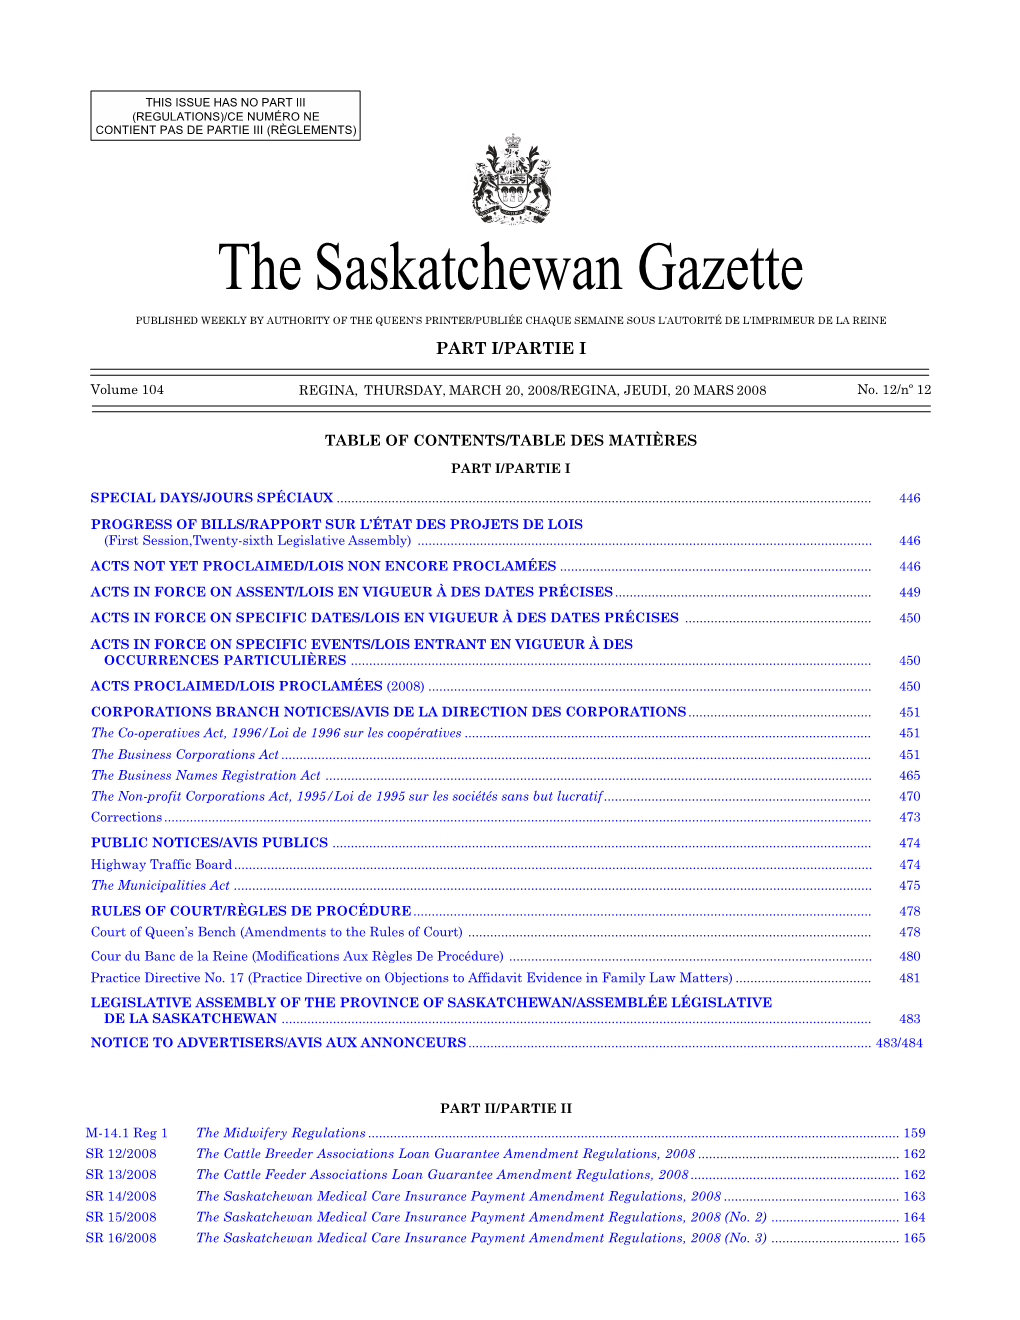 Sask Gazette, Part I, Mar 20, 2008